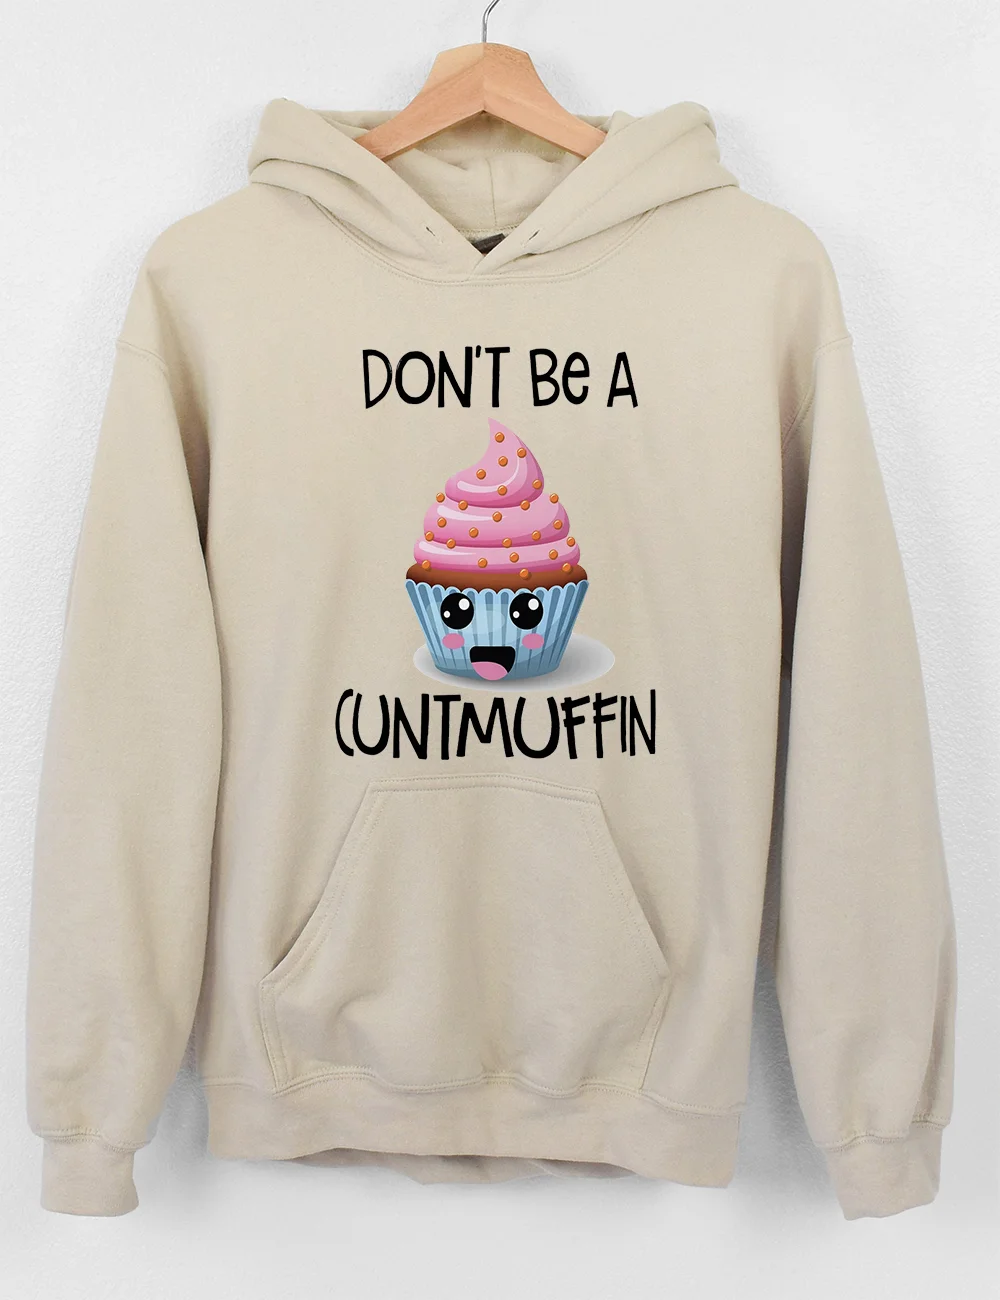 Don't Be A Cuntmuffin/Twatwaffle Hoodie